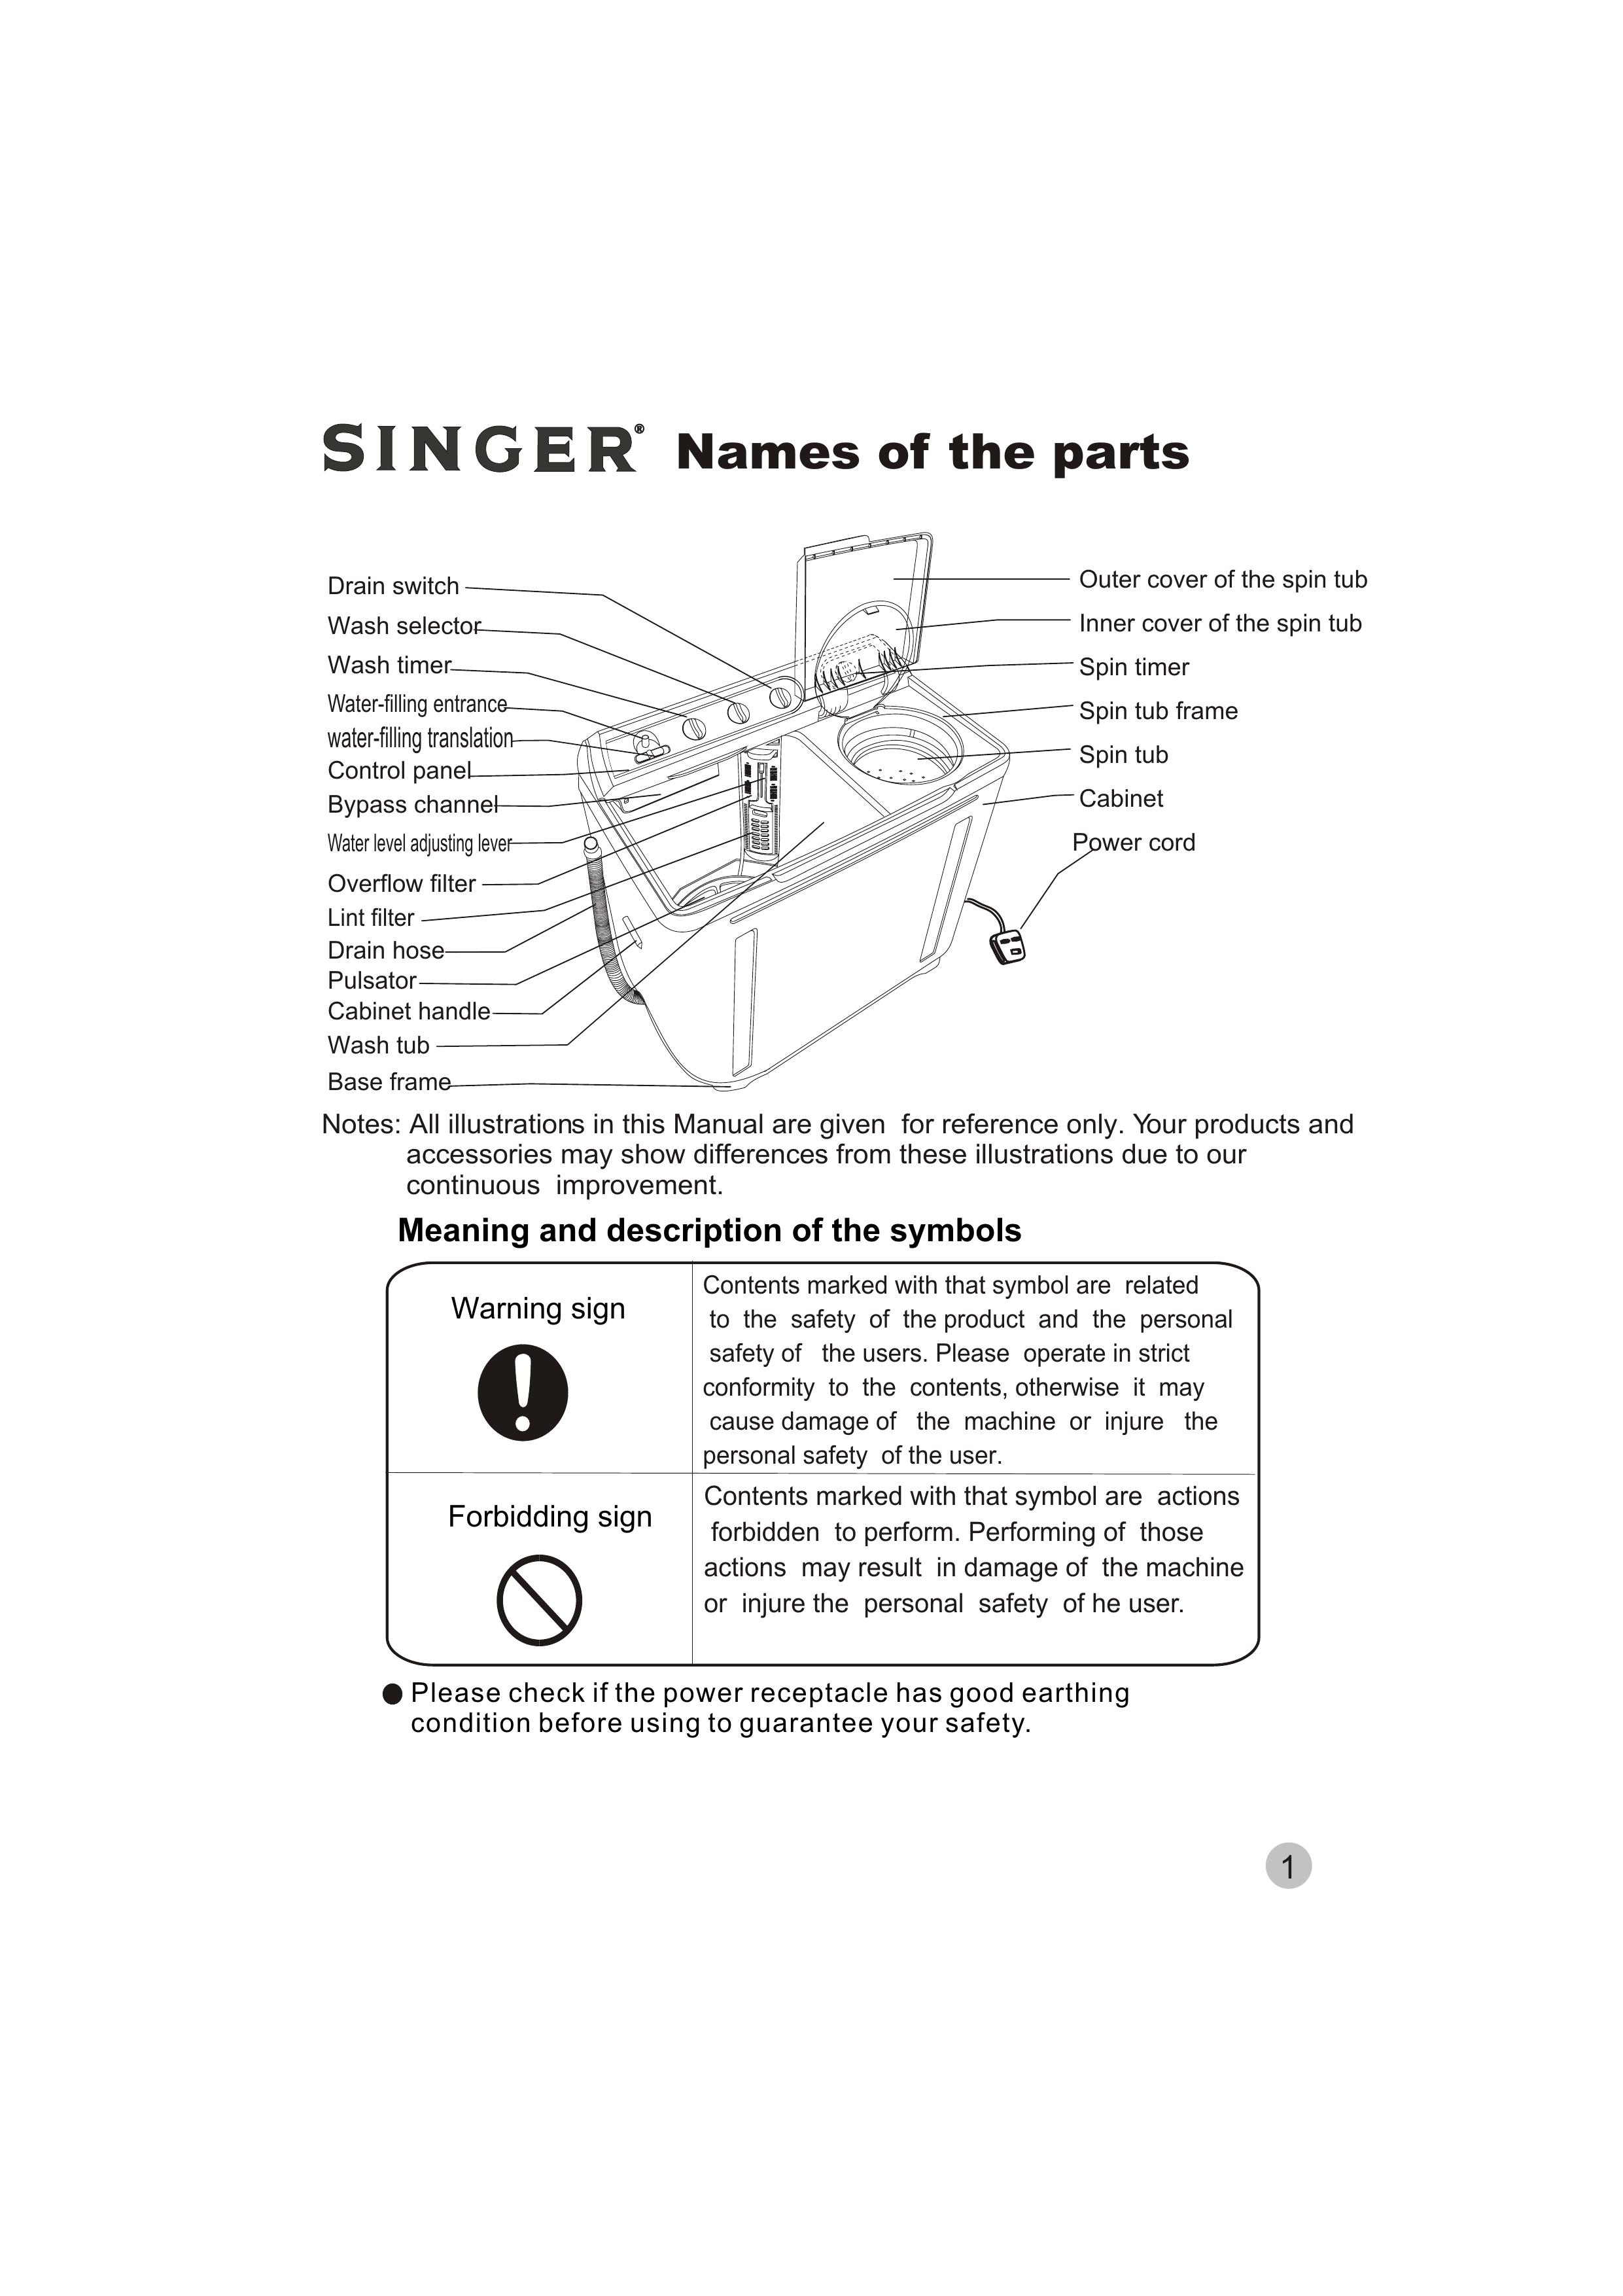 Singer WT5113 Washer/Dryer User Manual (Page 2)